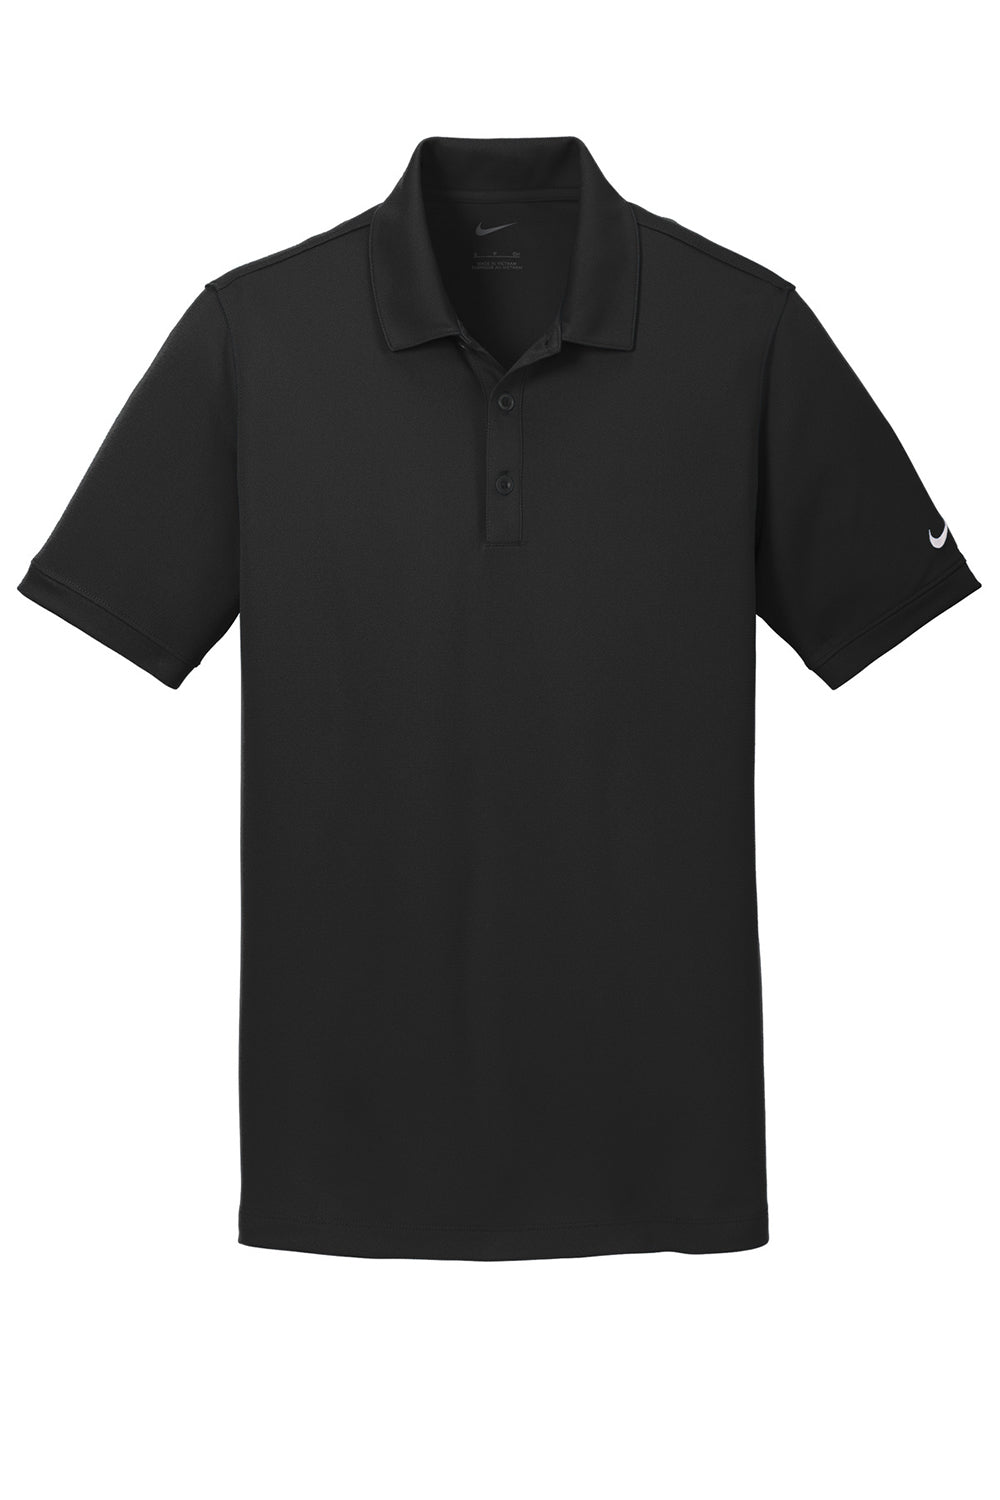 Nike 746099 Mens Icon Dri-Fit Moisture Wicking Short Sleeve Polo Shirt Black Flat Front